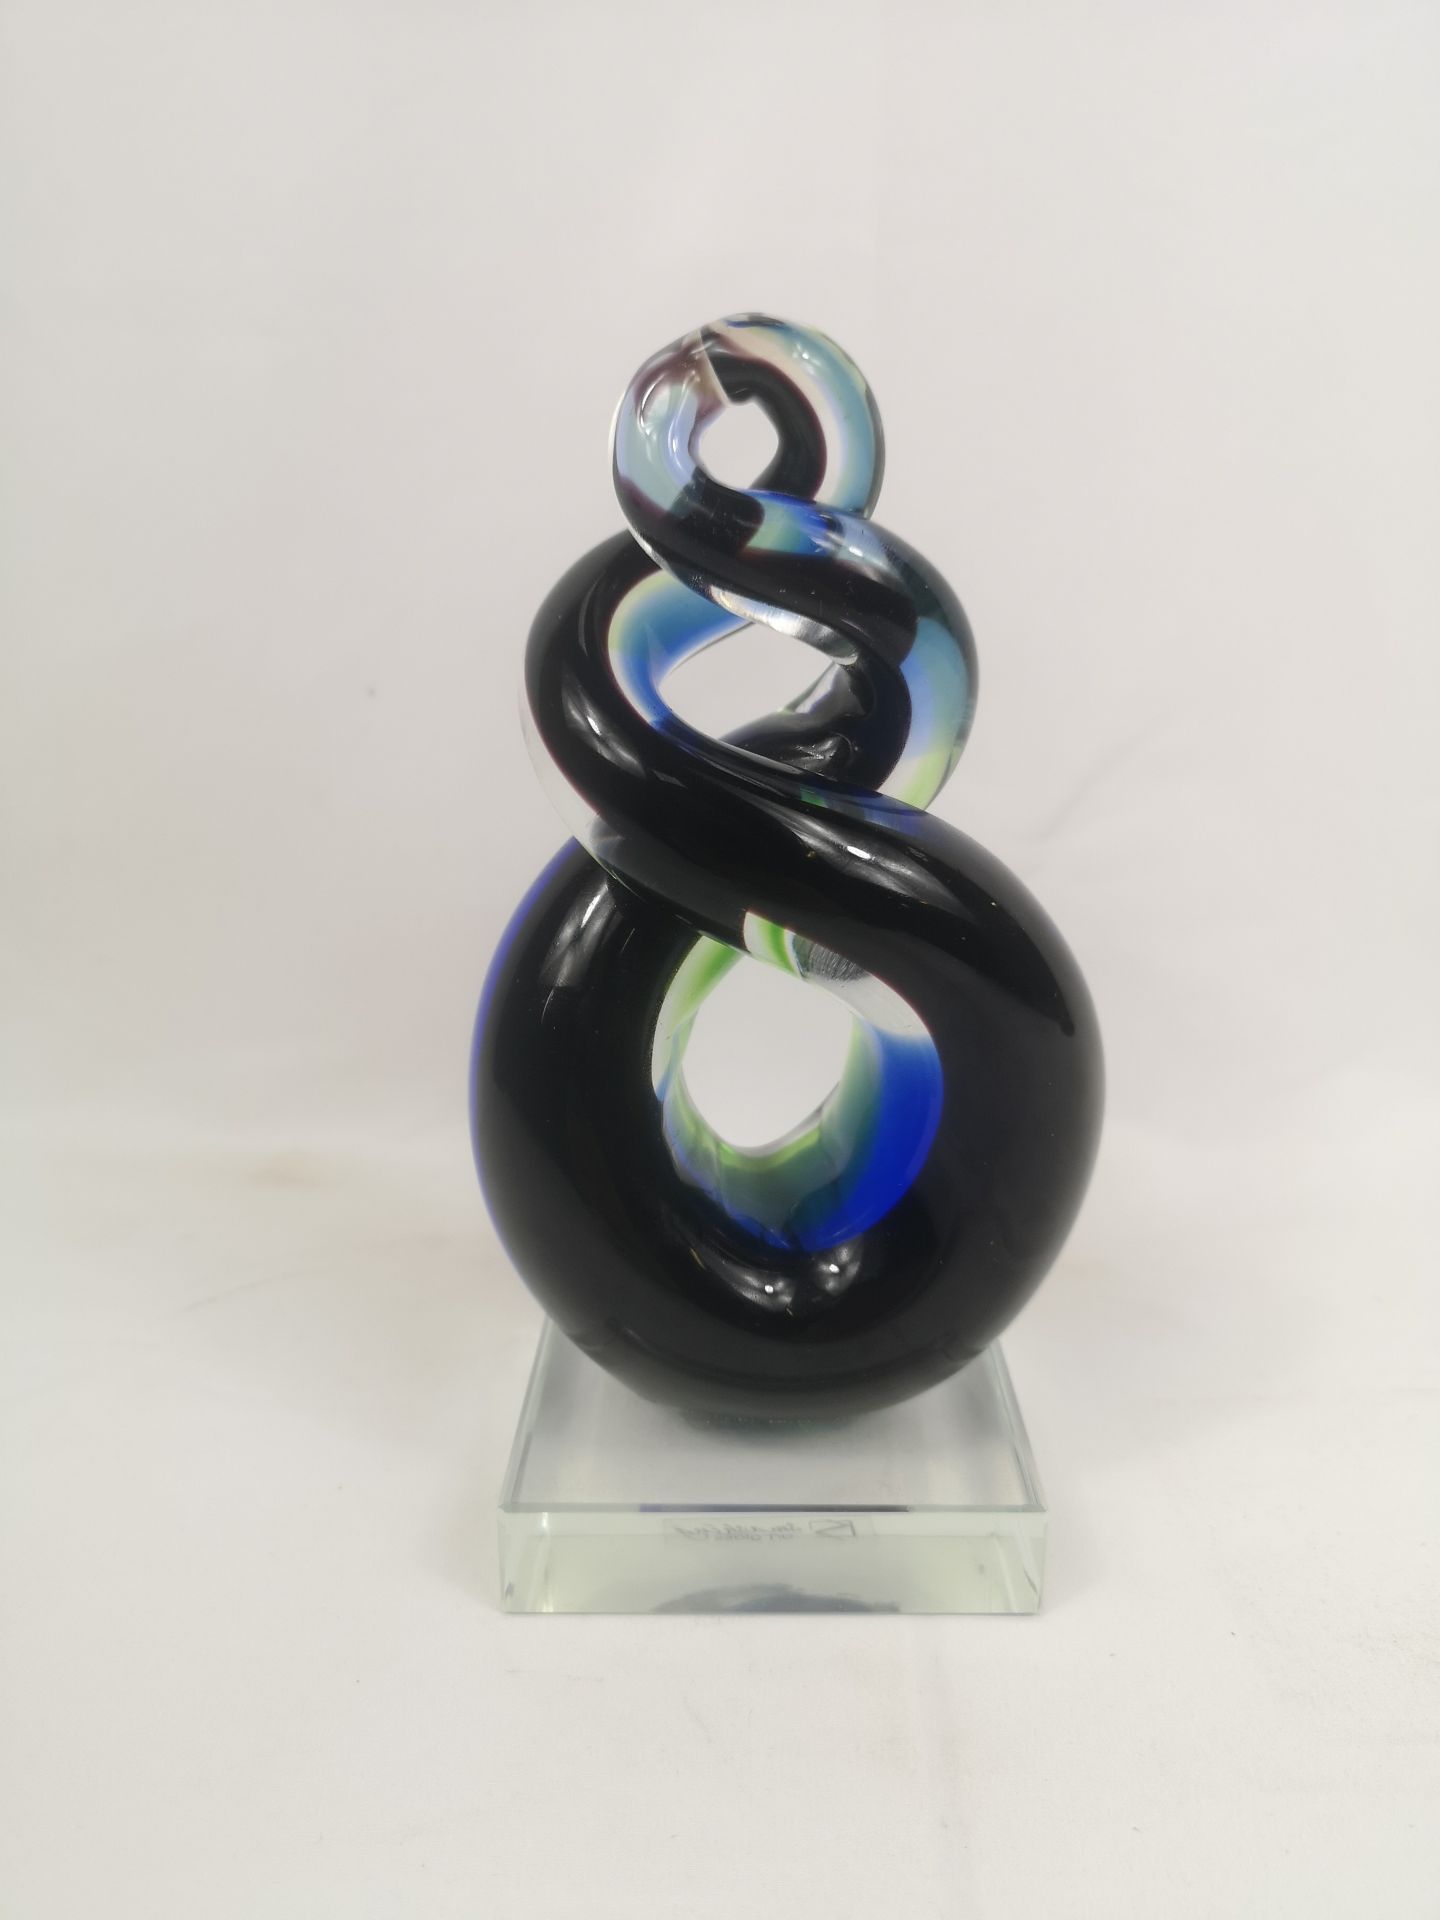 LSA glass bowl together with an art glass sculpture